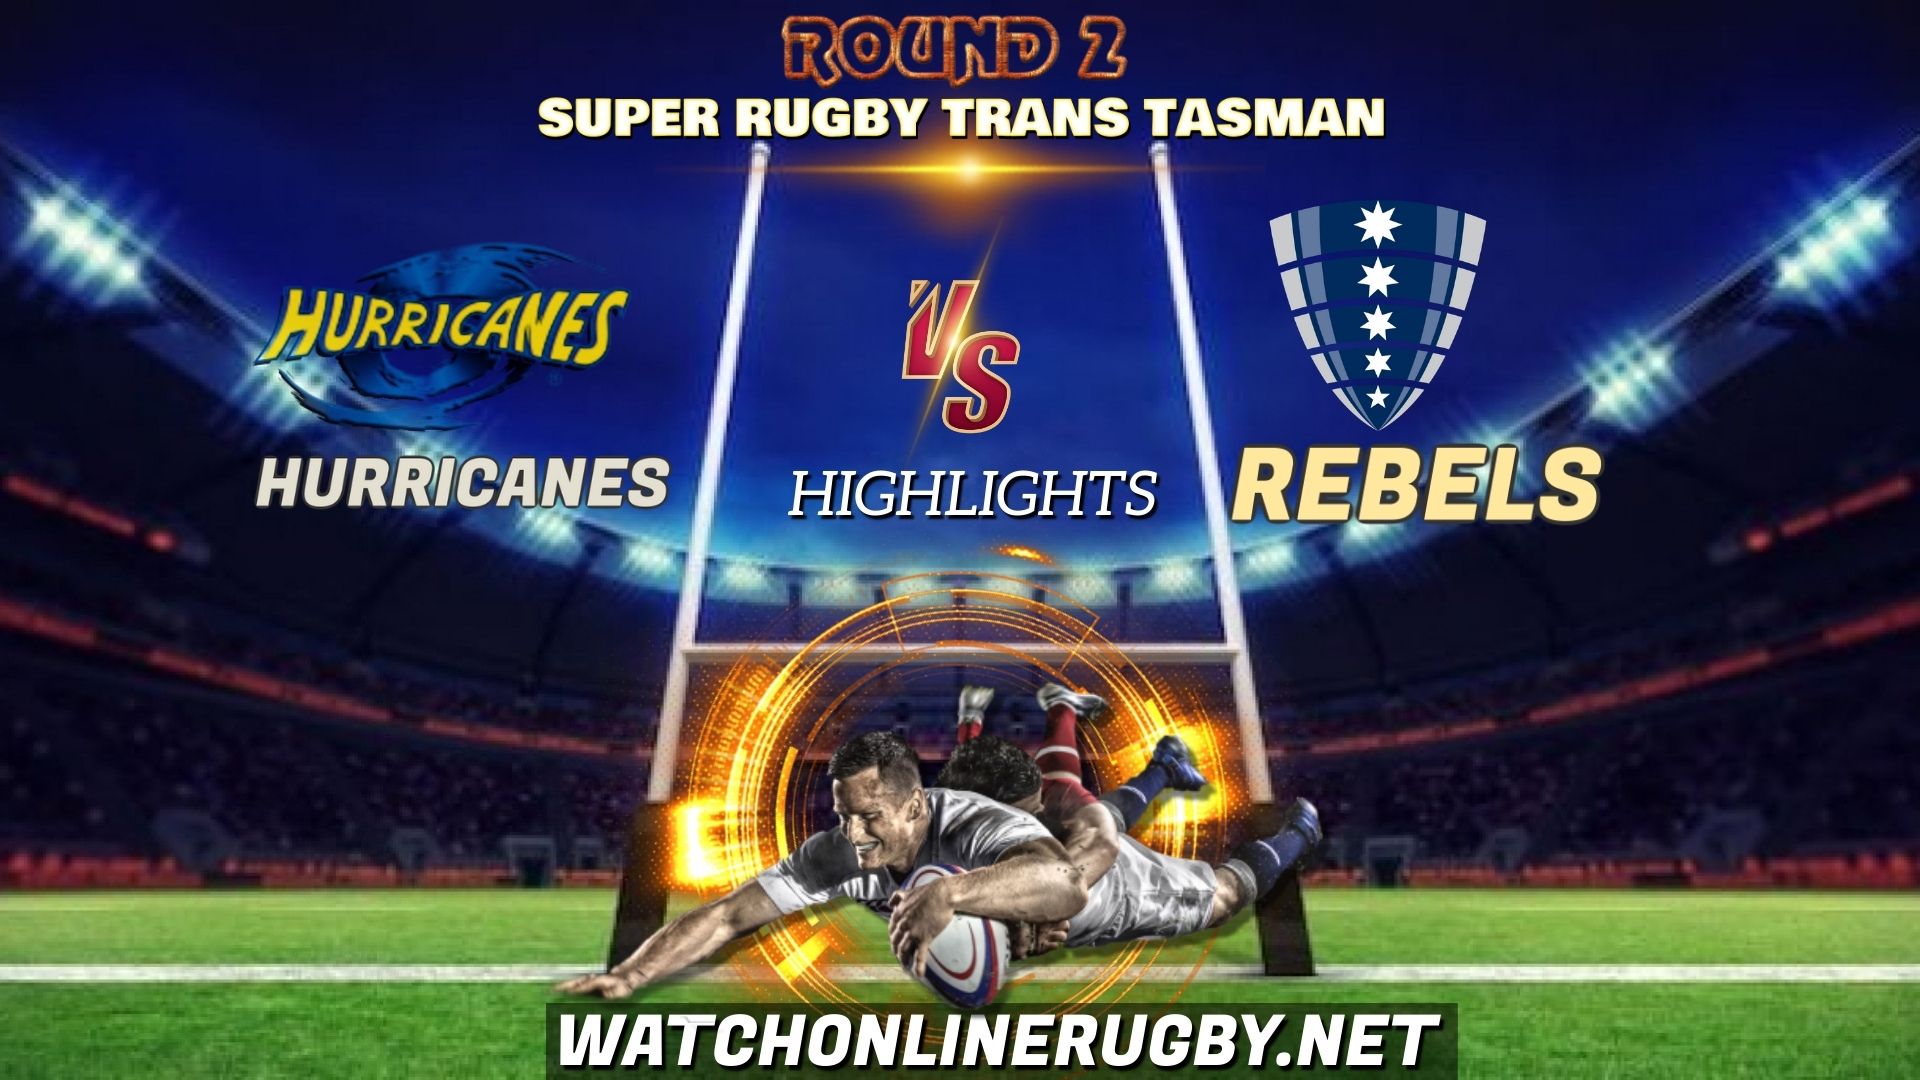 Hurricanes Vs Rebels Super Rugby Trans Tasman 2021 RD 2